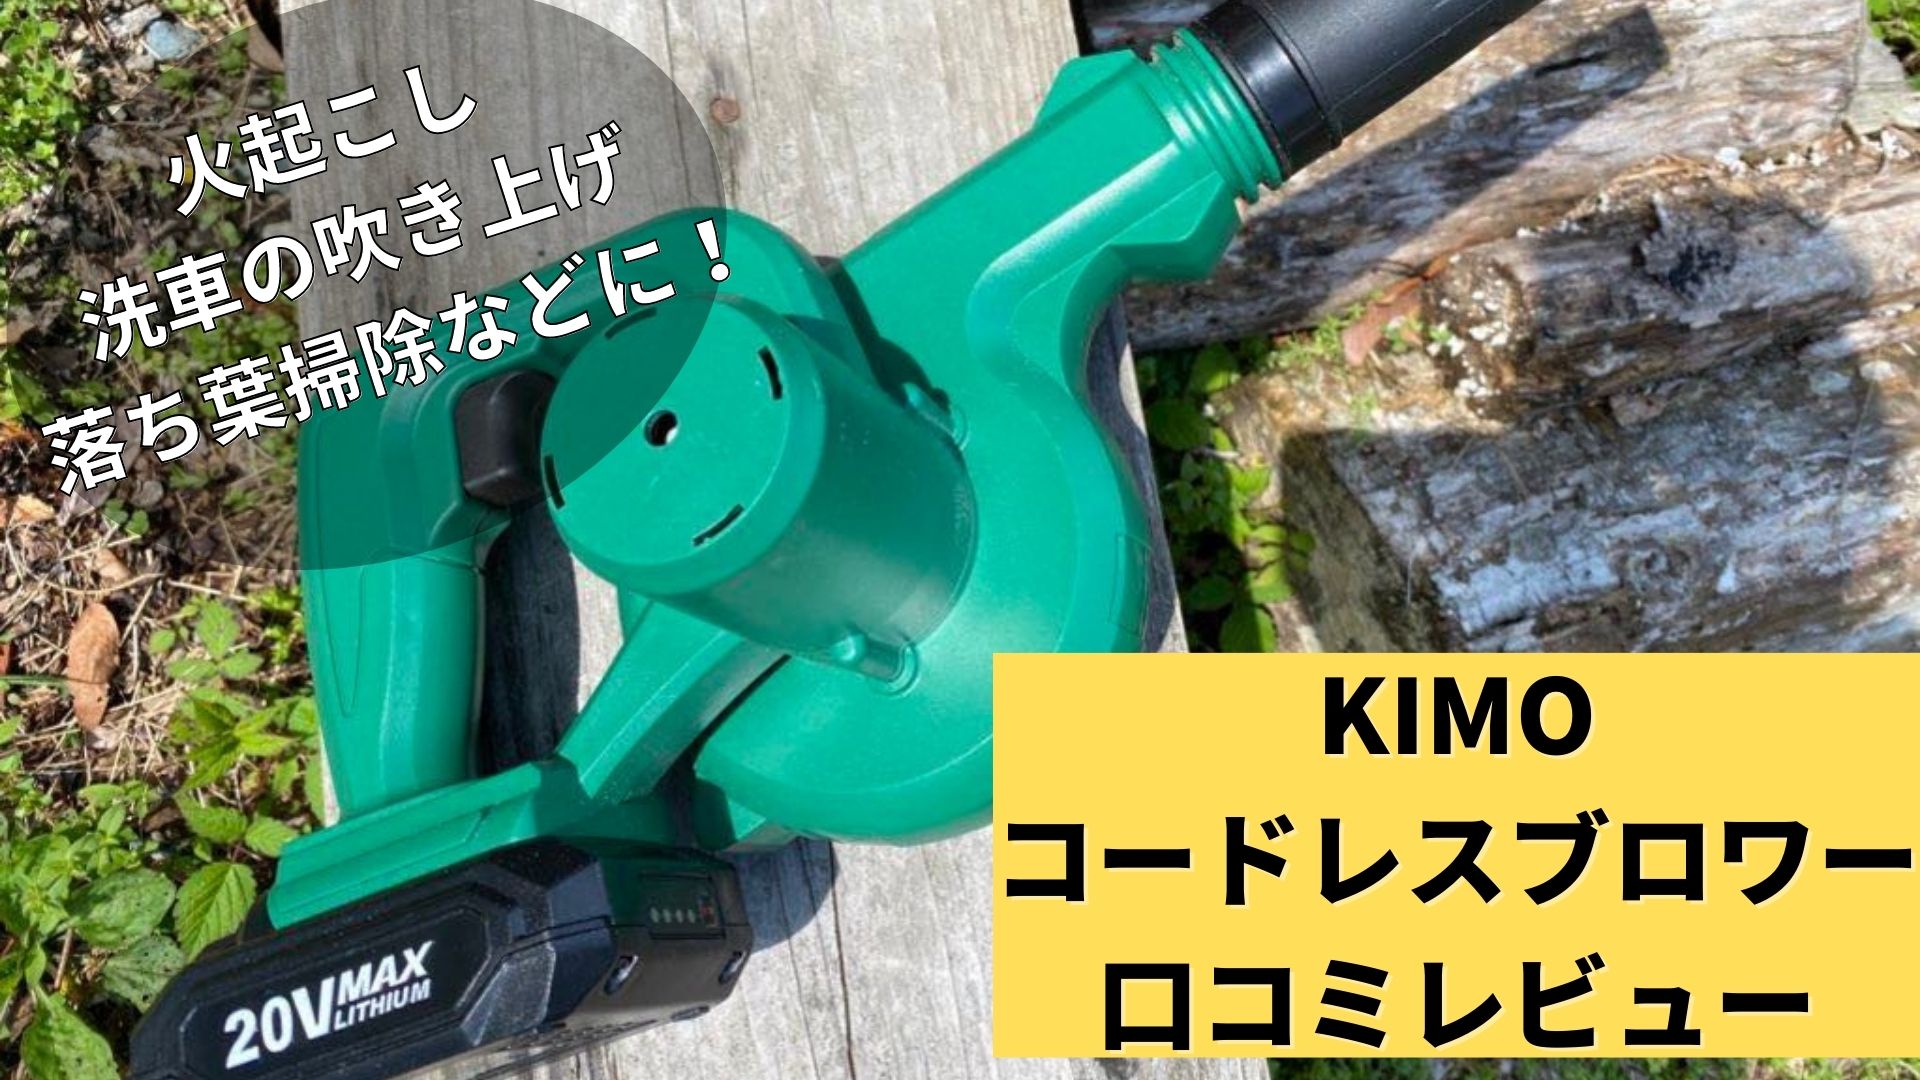 KIMO ブロワー大風量 充電式冷暖房/空調